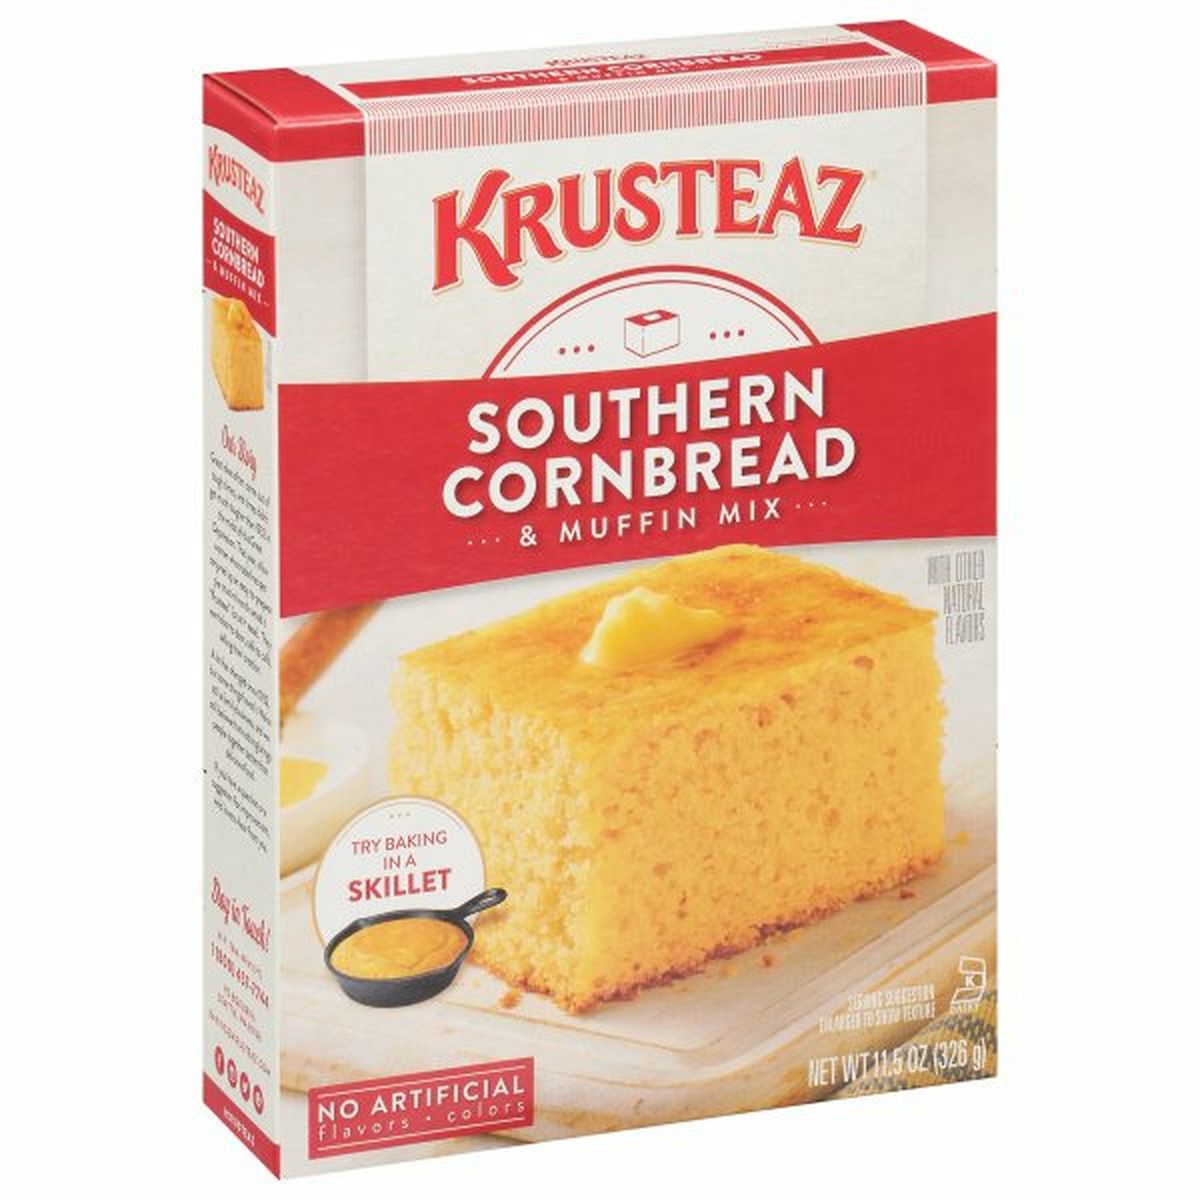 Calories in Krusteaz Cornbread & Muffin Mix, Southern